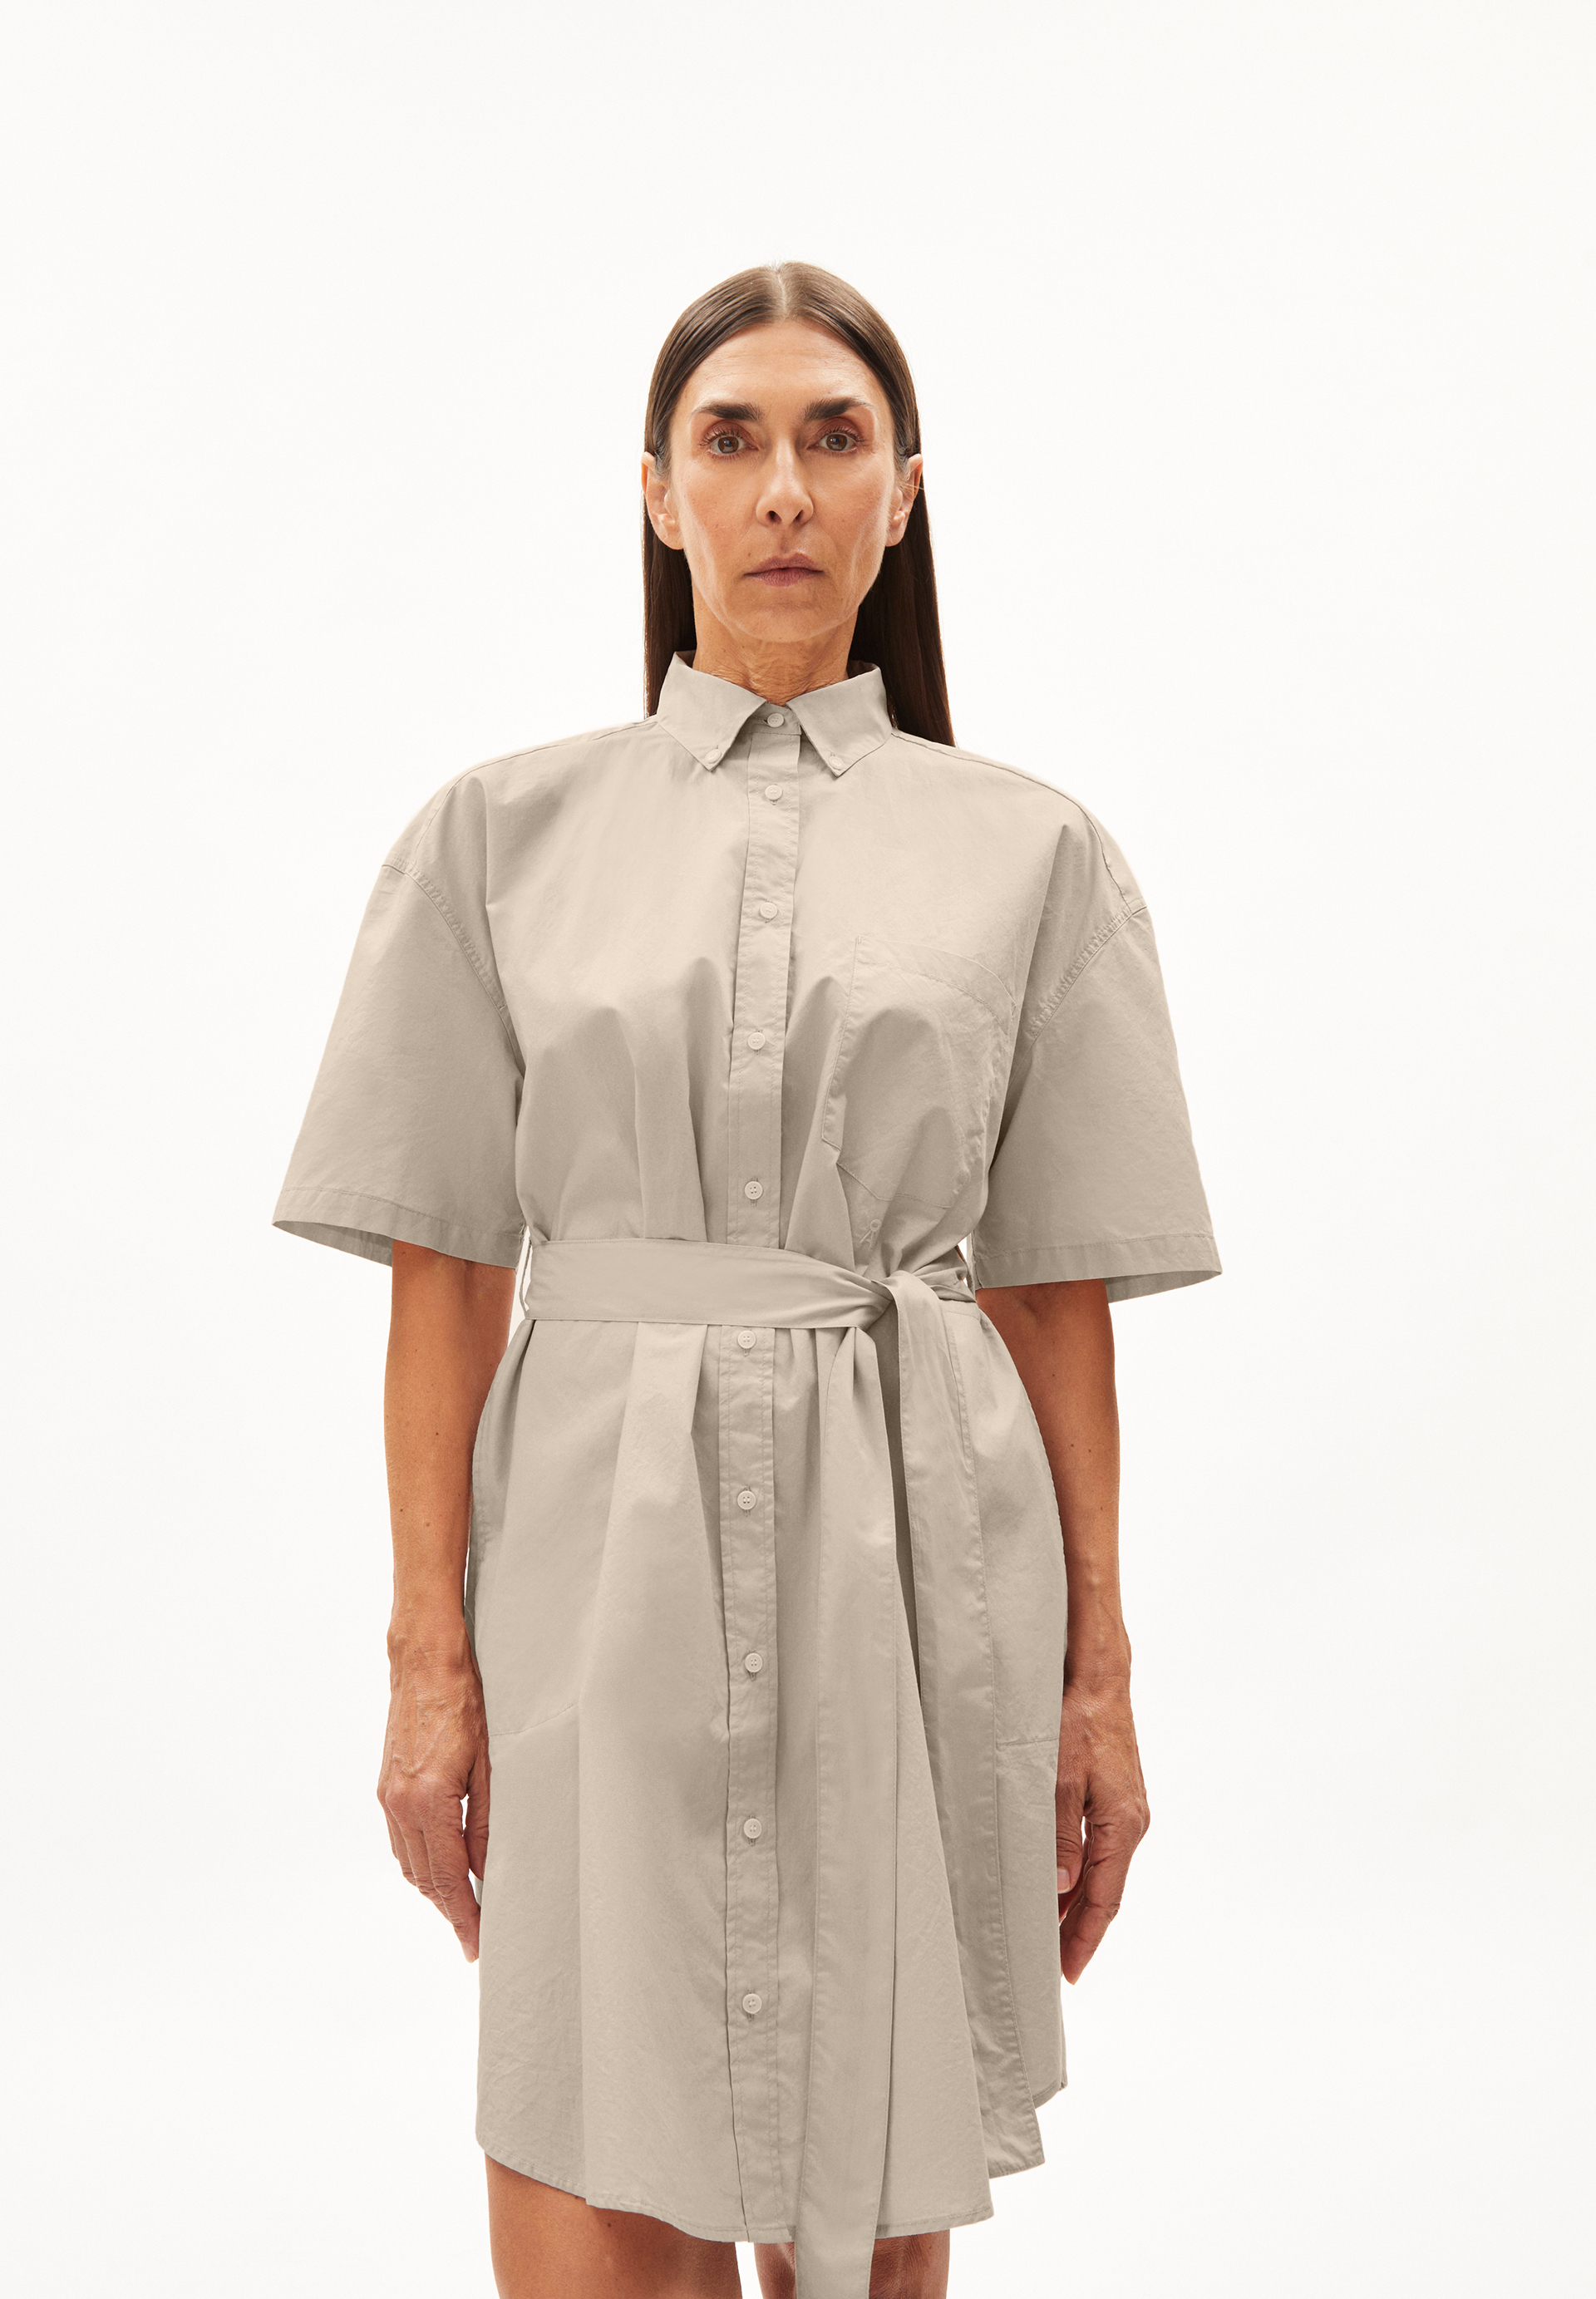 JAASMYN Woven Dress Oversized Fit made of Organic Cotton